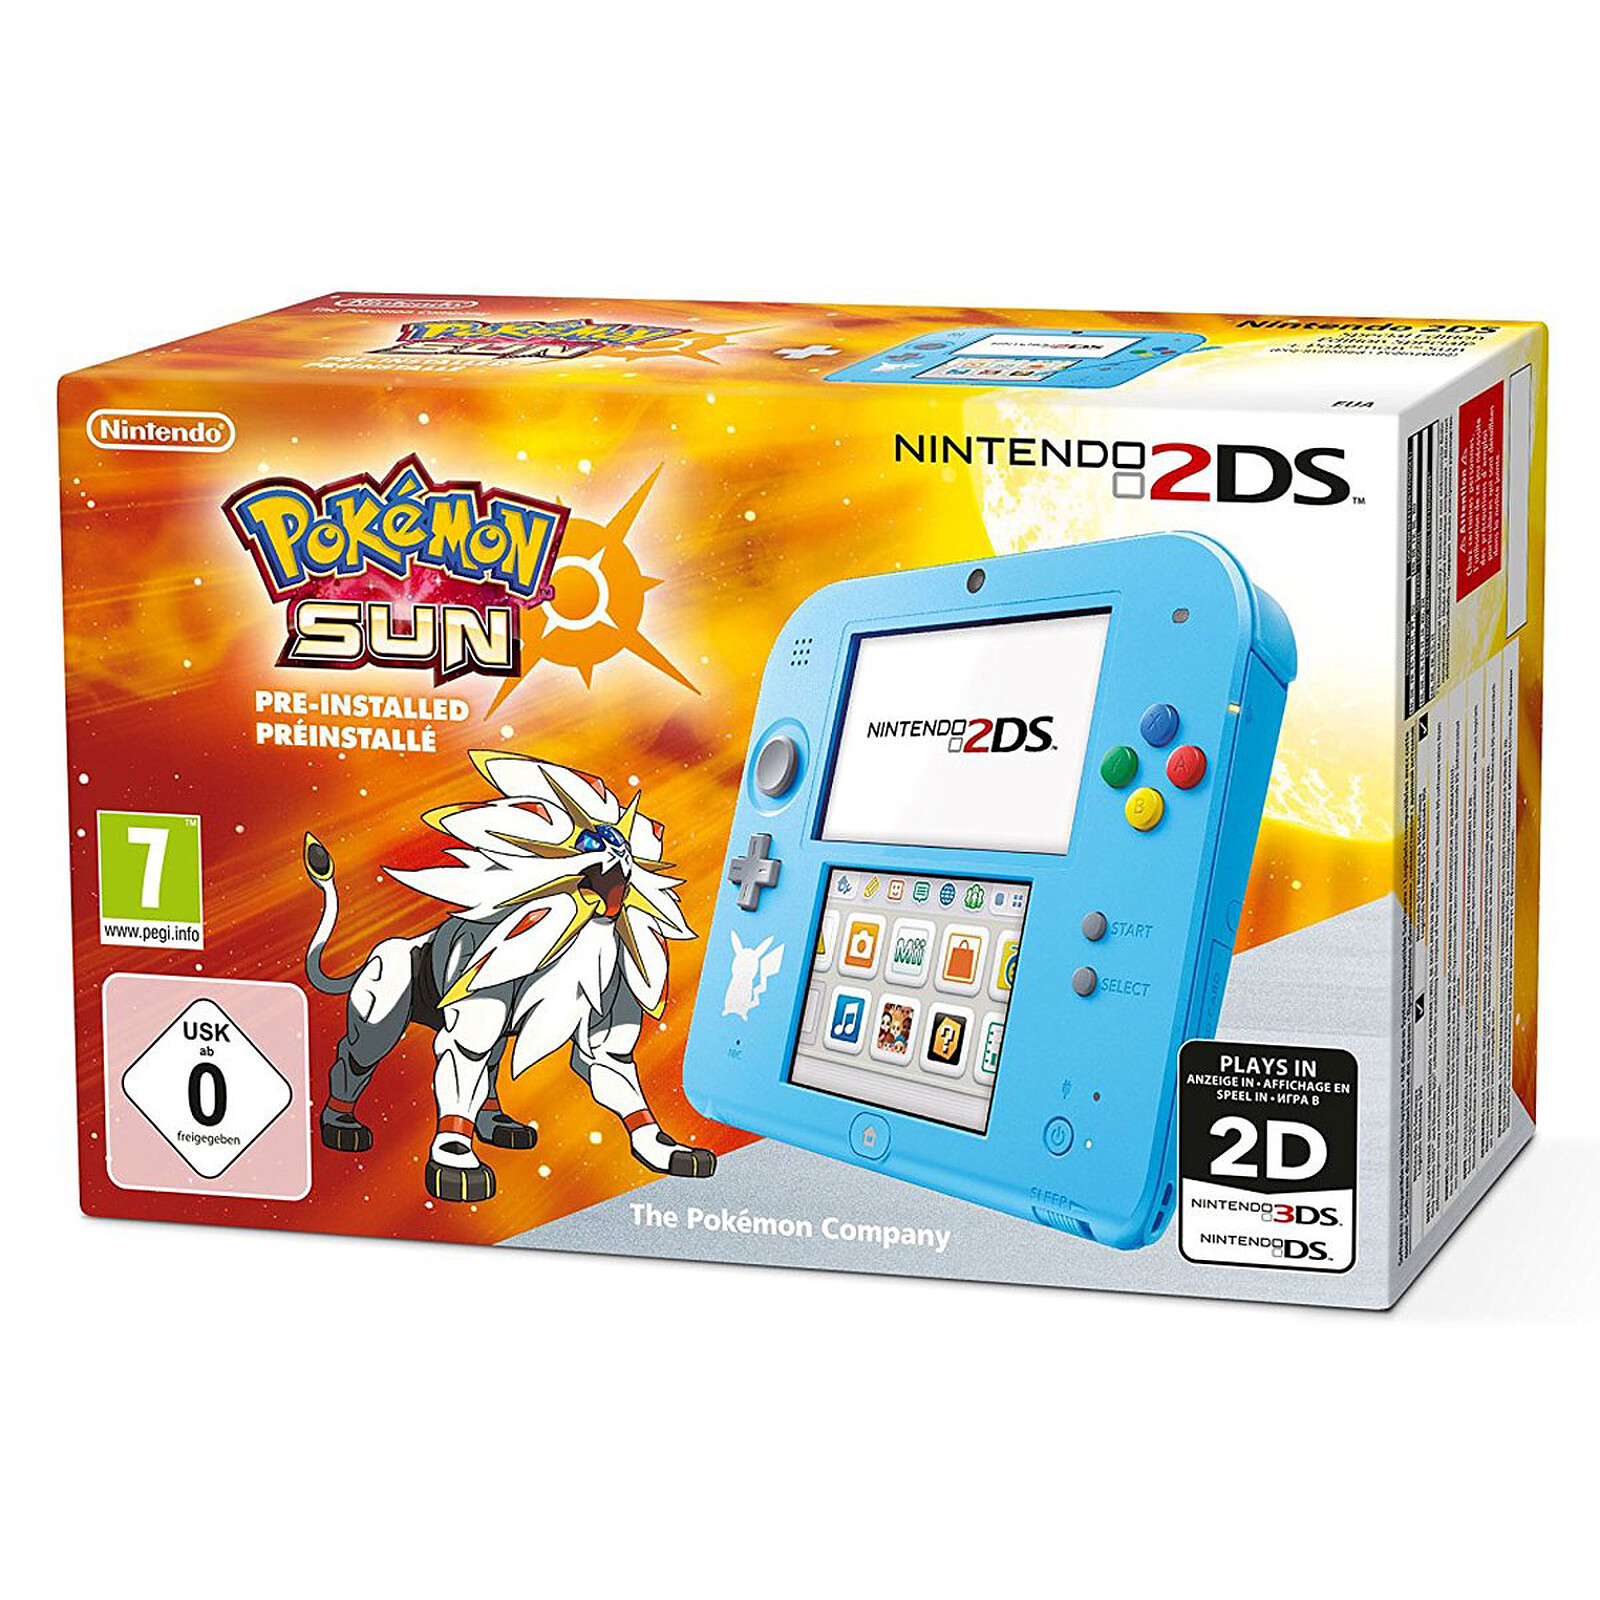 Nintendo 2ds Limited. Nintendo 2ds Pokemon Limited Edition. Pokemon Moon (Nintendo 3ds).